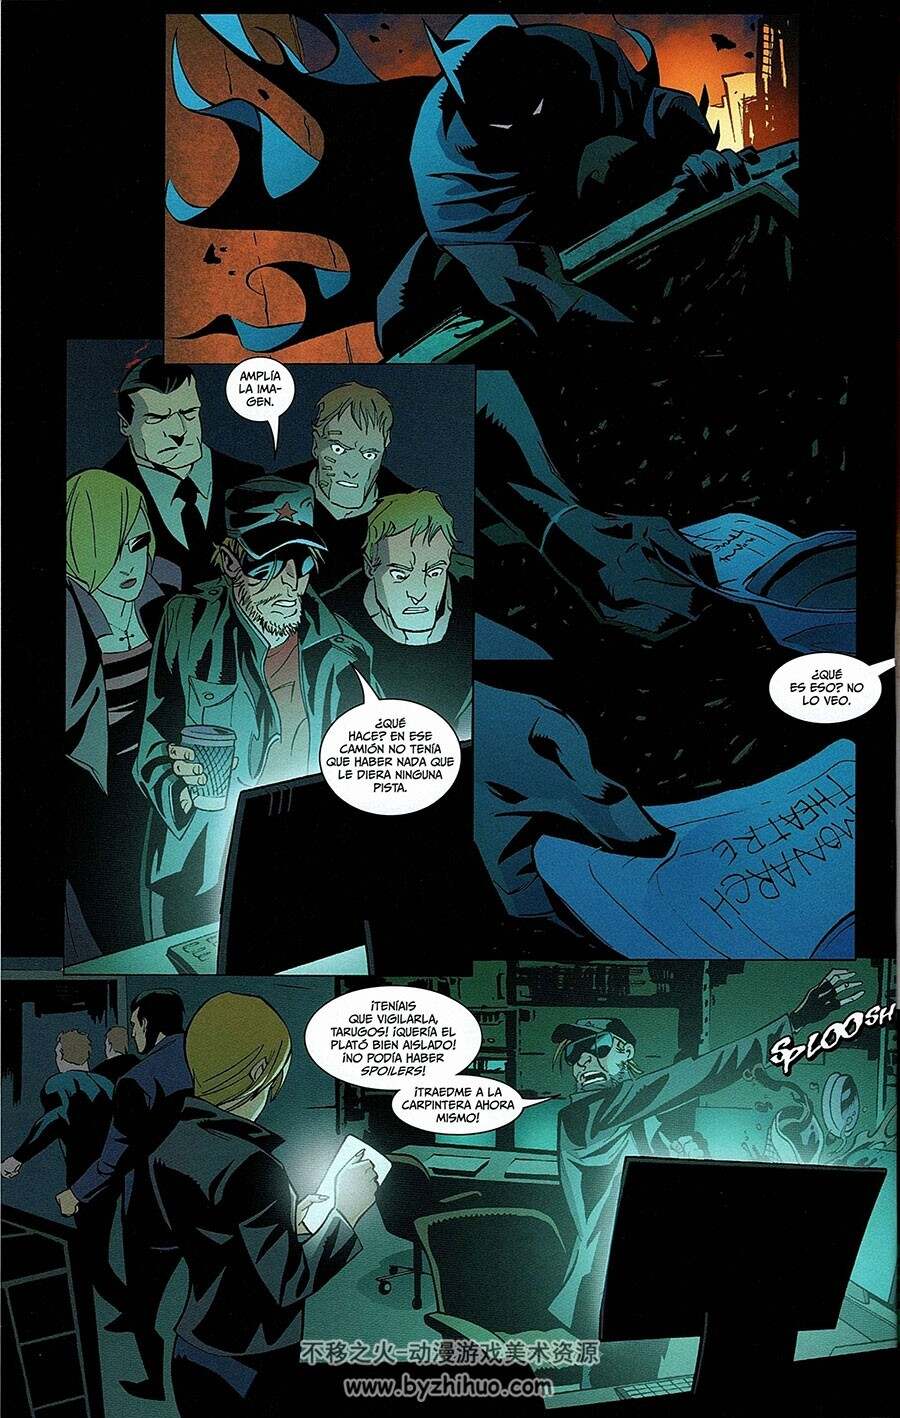 Batman Calles de Gotham 1-3册 Dustin Nguyen - Paul Dini 美国DC蝙蝠侠漫画西班牙语版